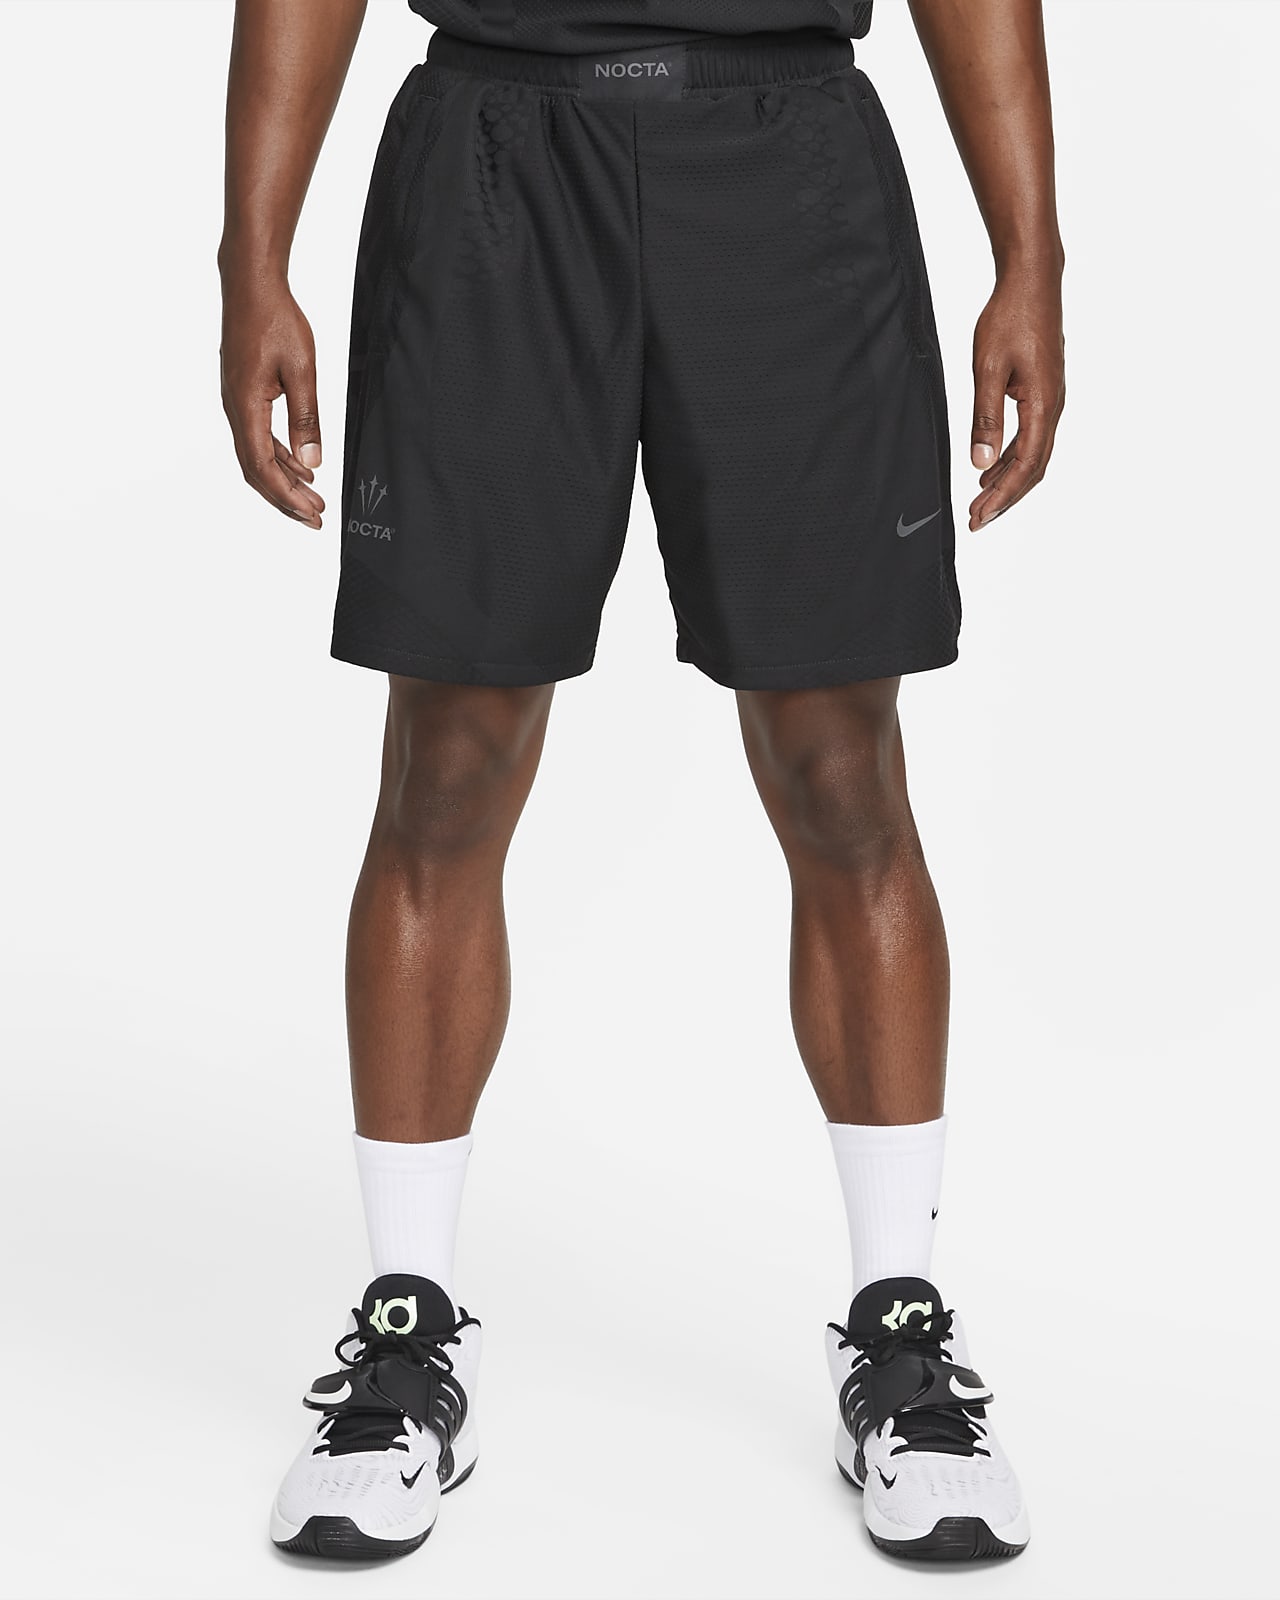 NOCTA Men's Basketball Shorts. Nike LU